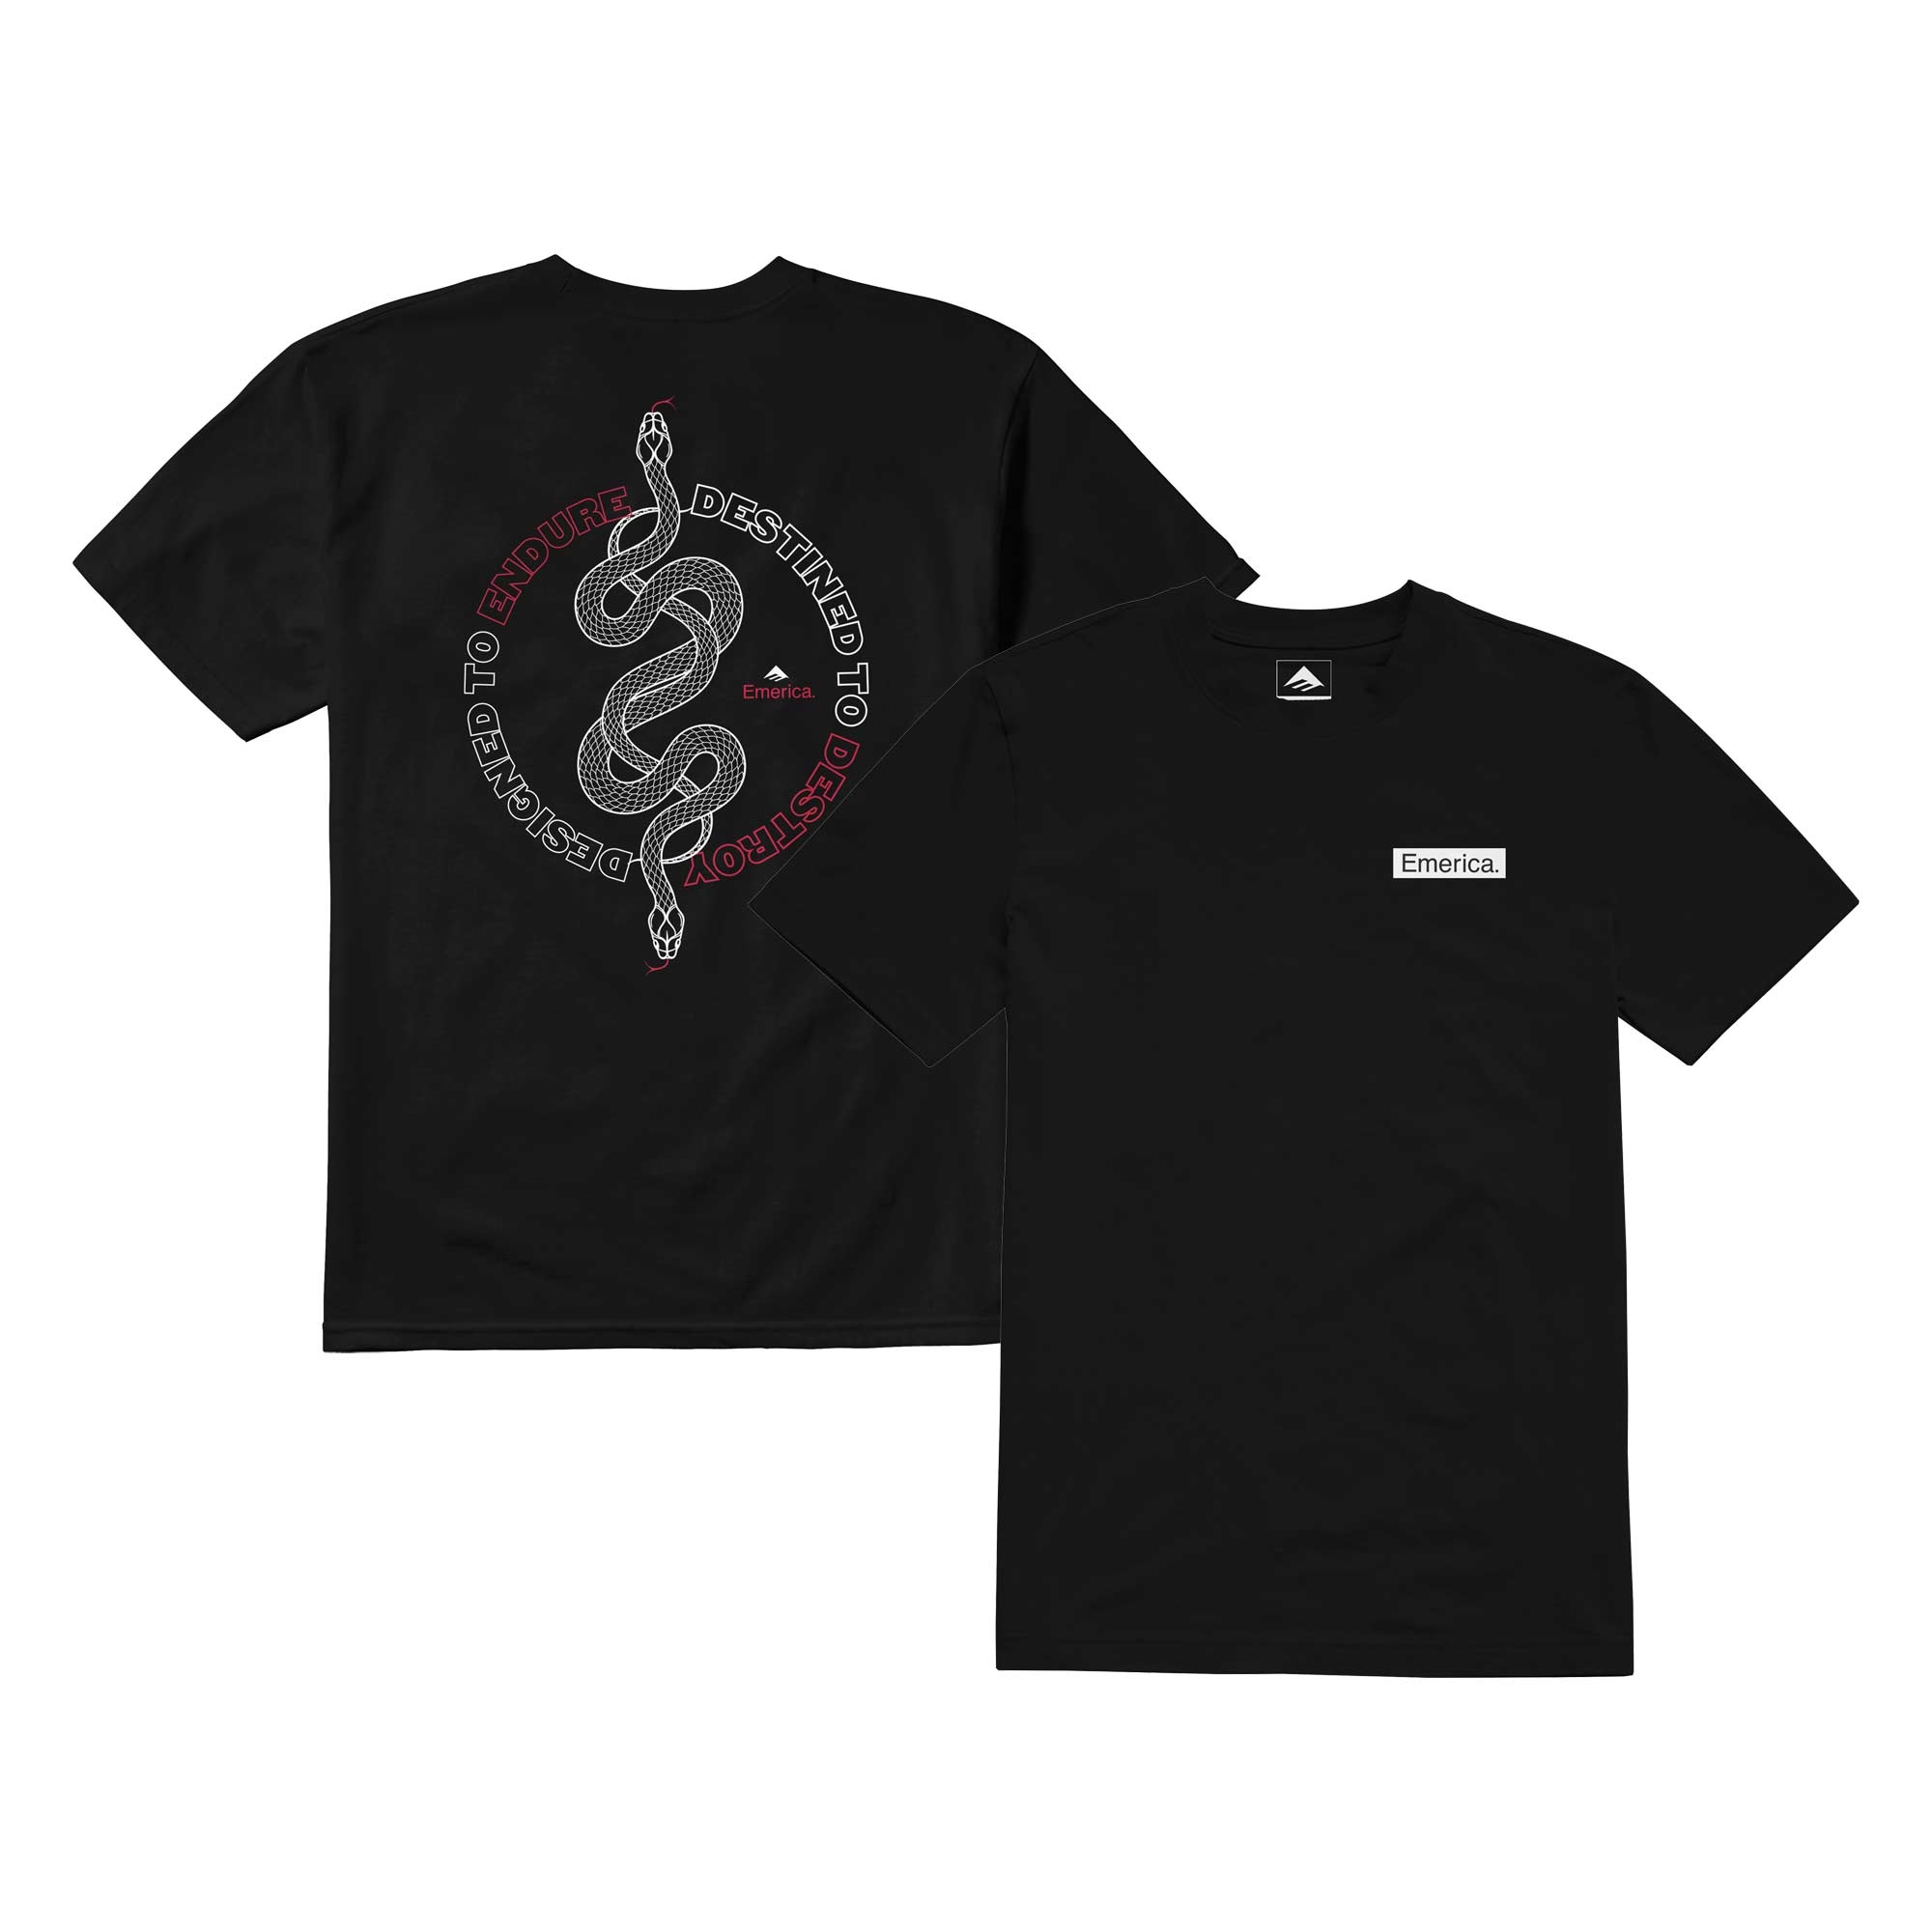 EMERICA T-Shirt ENDURE DESTROY S/S black